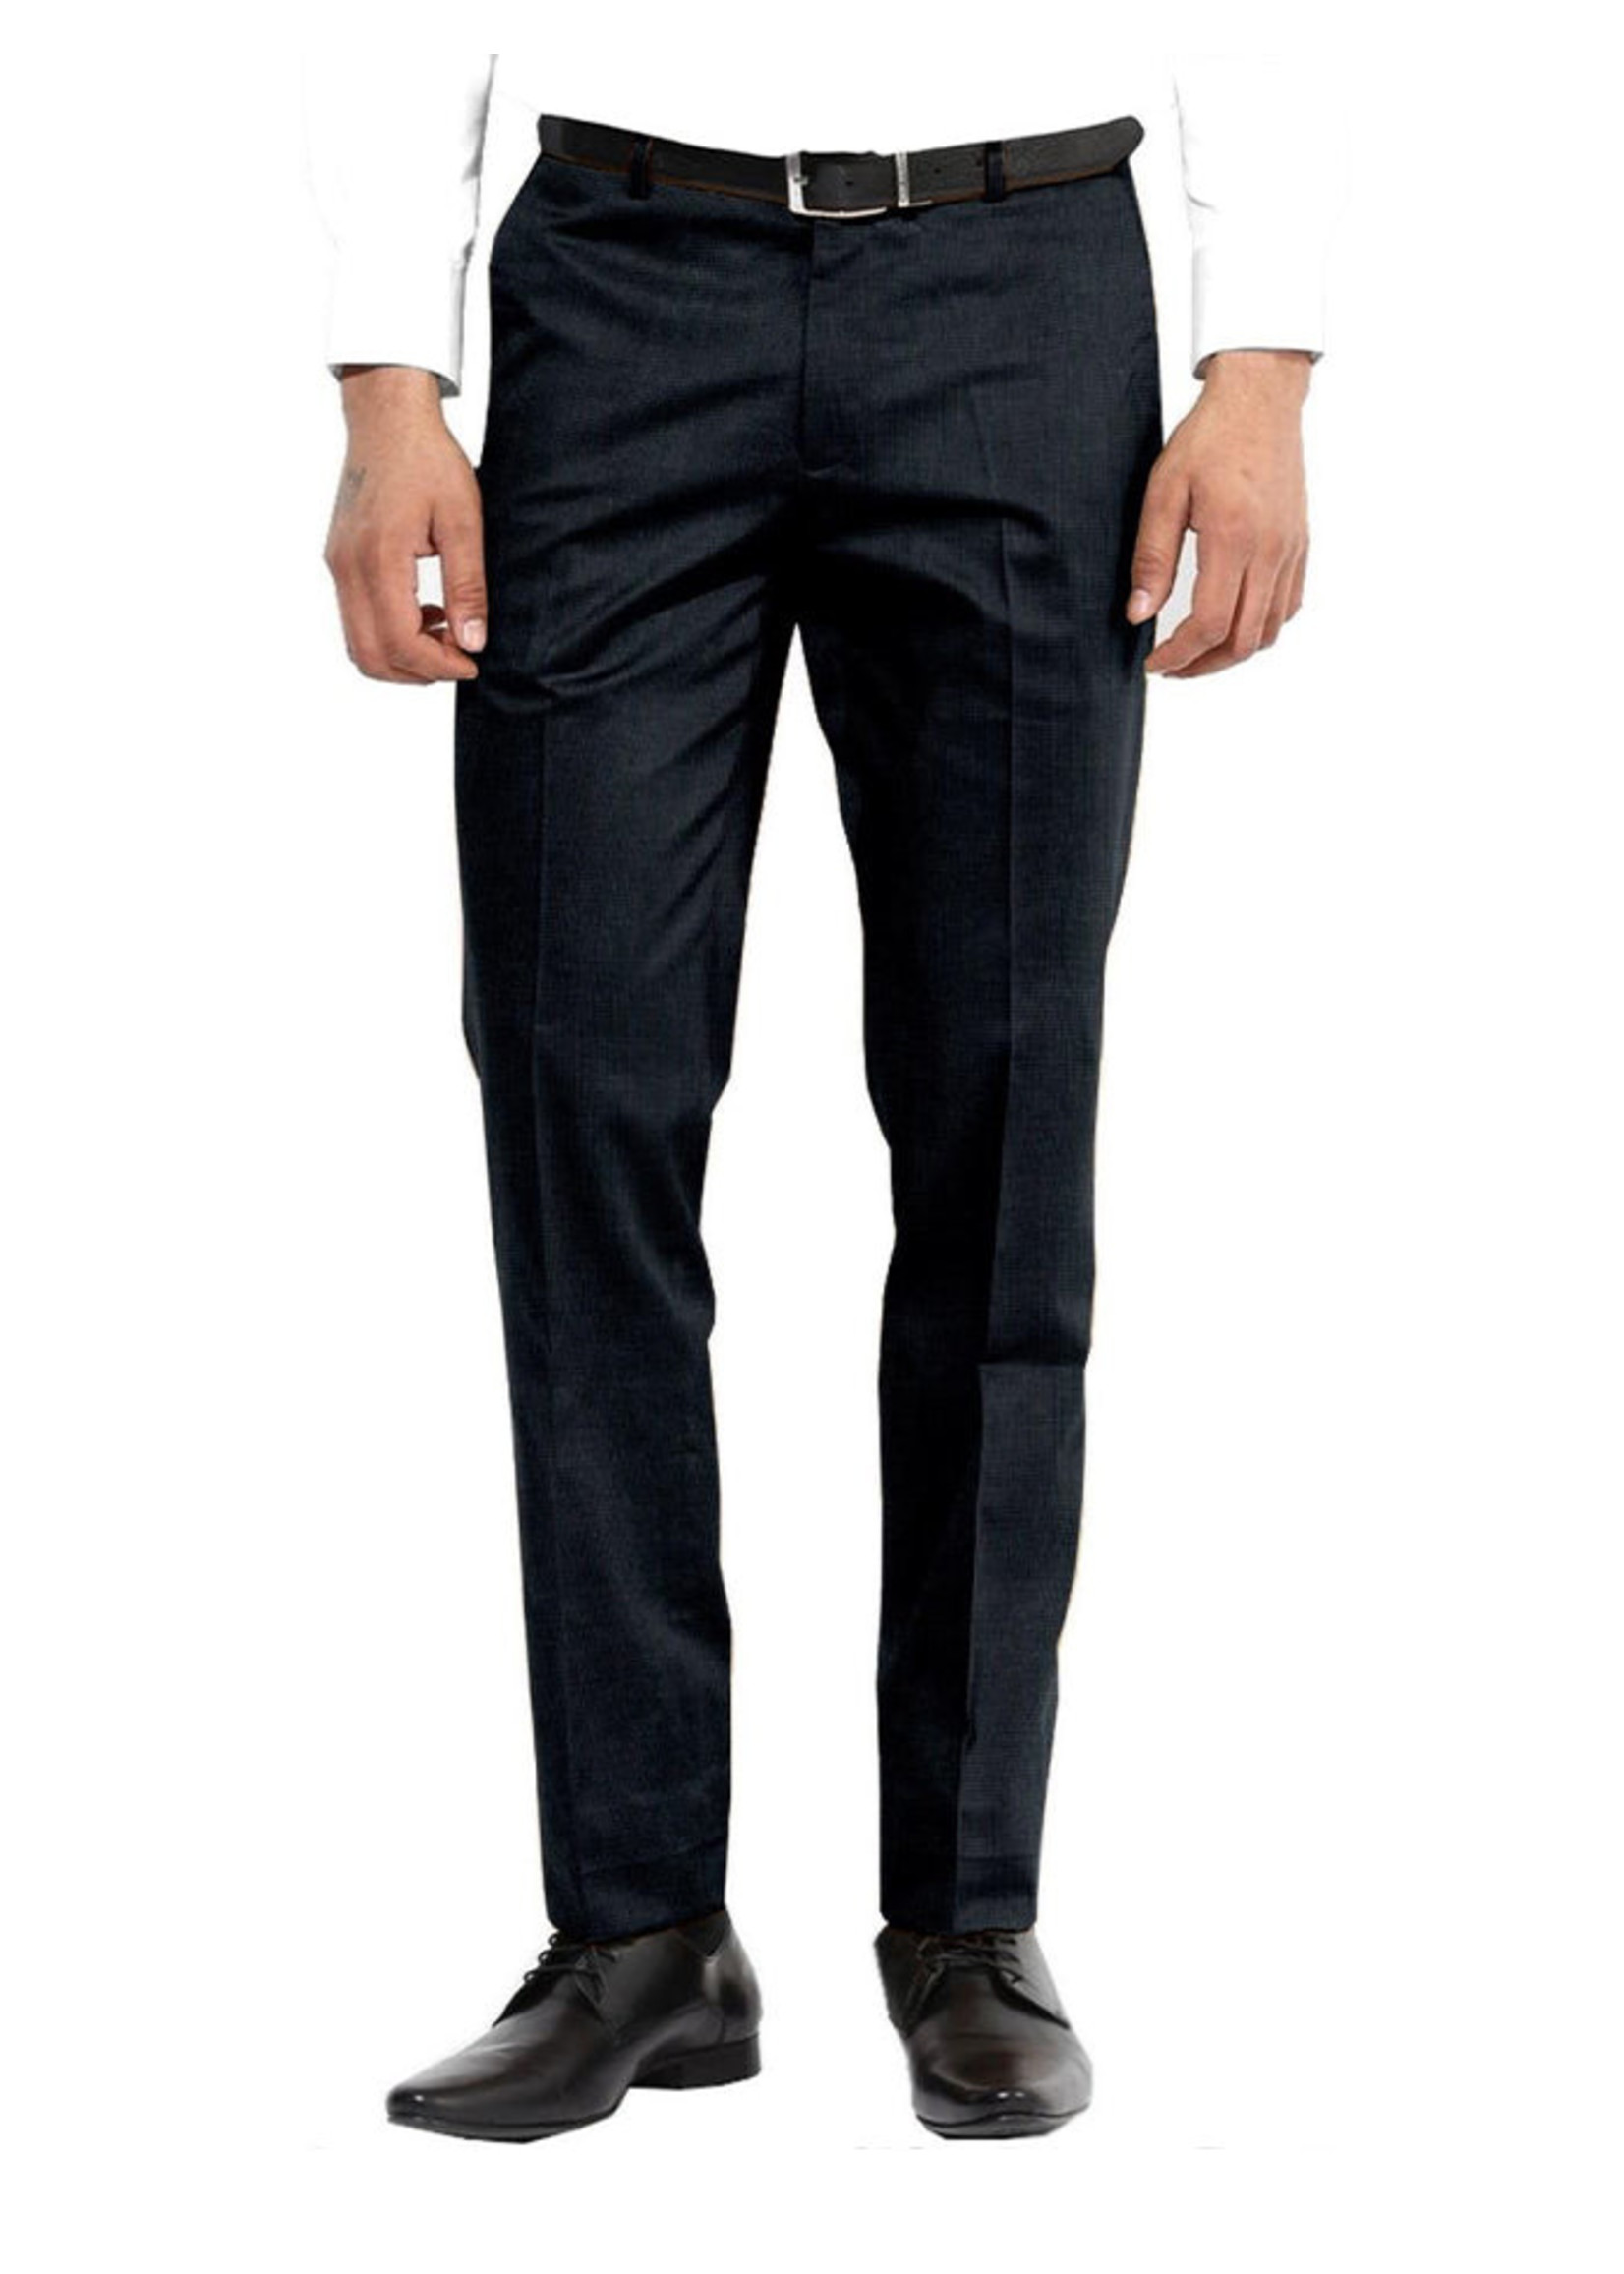 CITADIN Men's quater pocket dress jeans